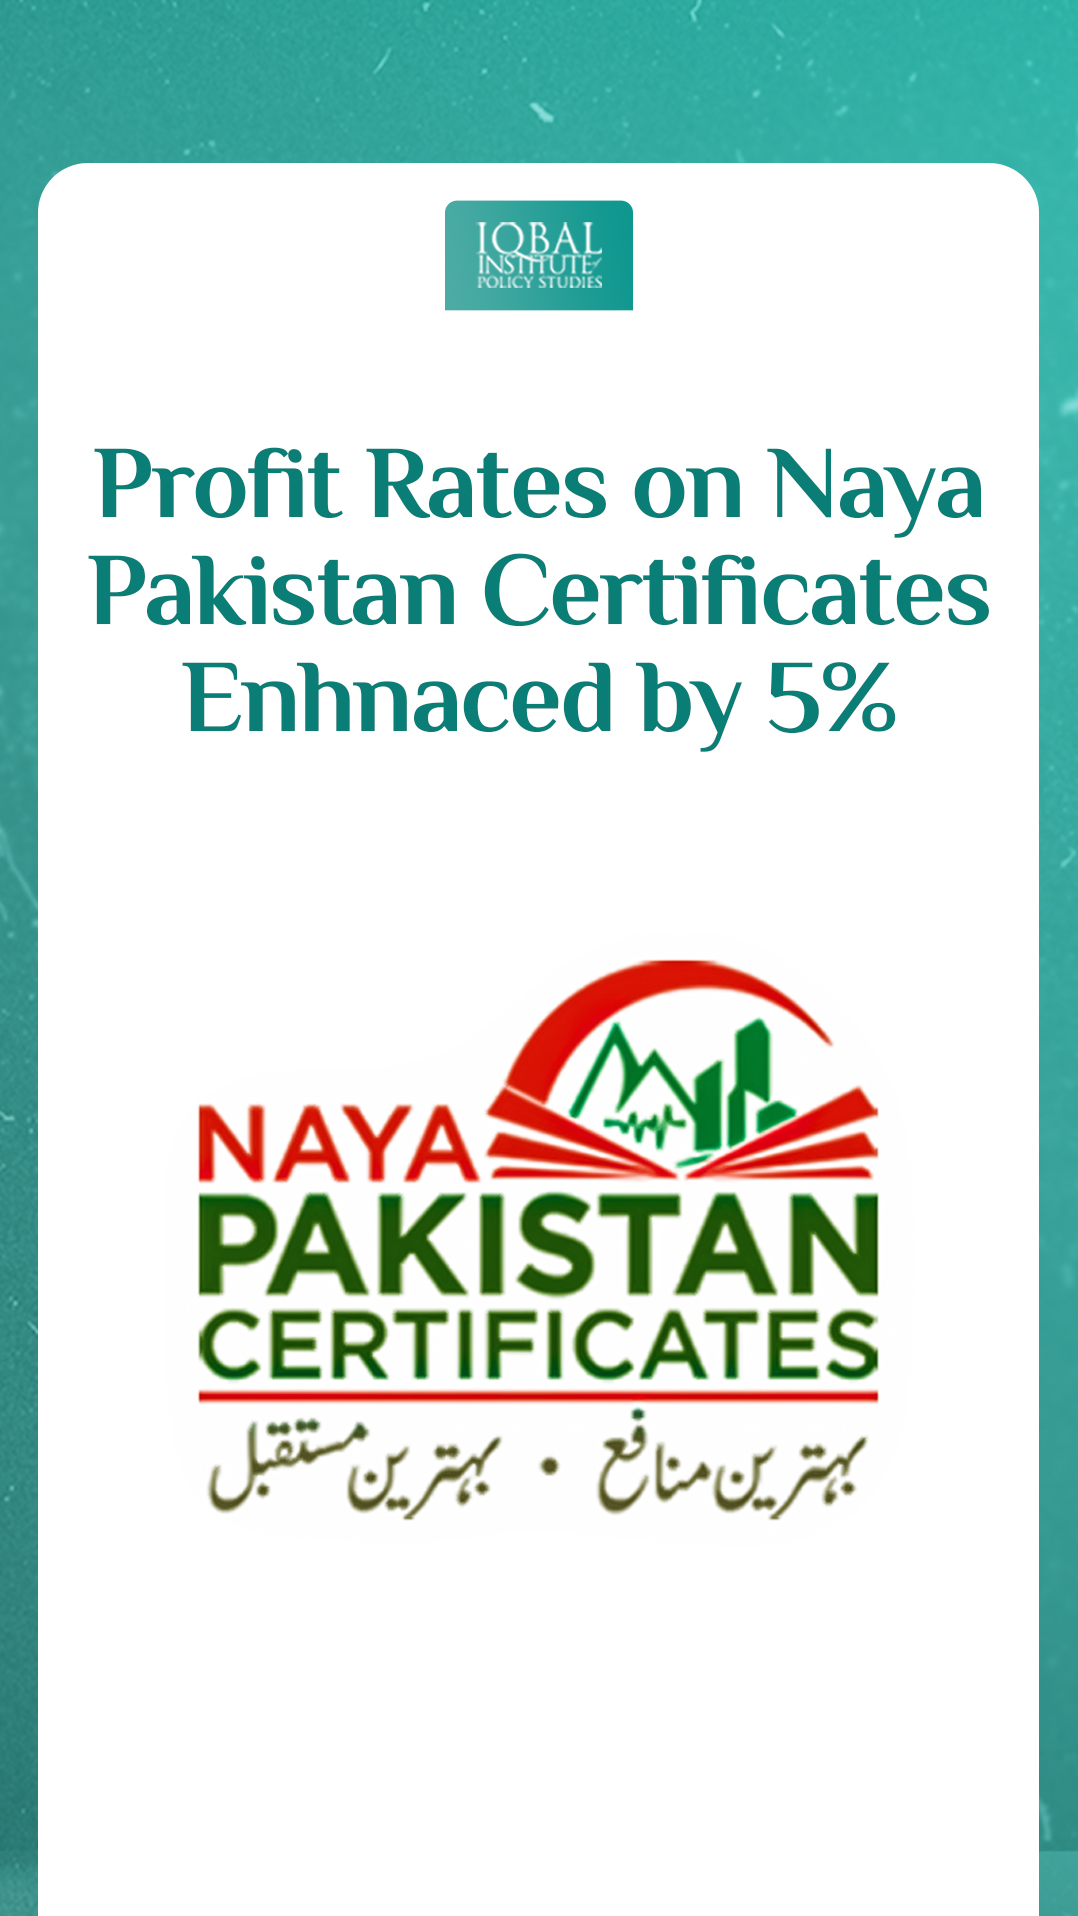 Profit rates on Naya Pakistan Certificates enhanced by 5%